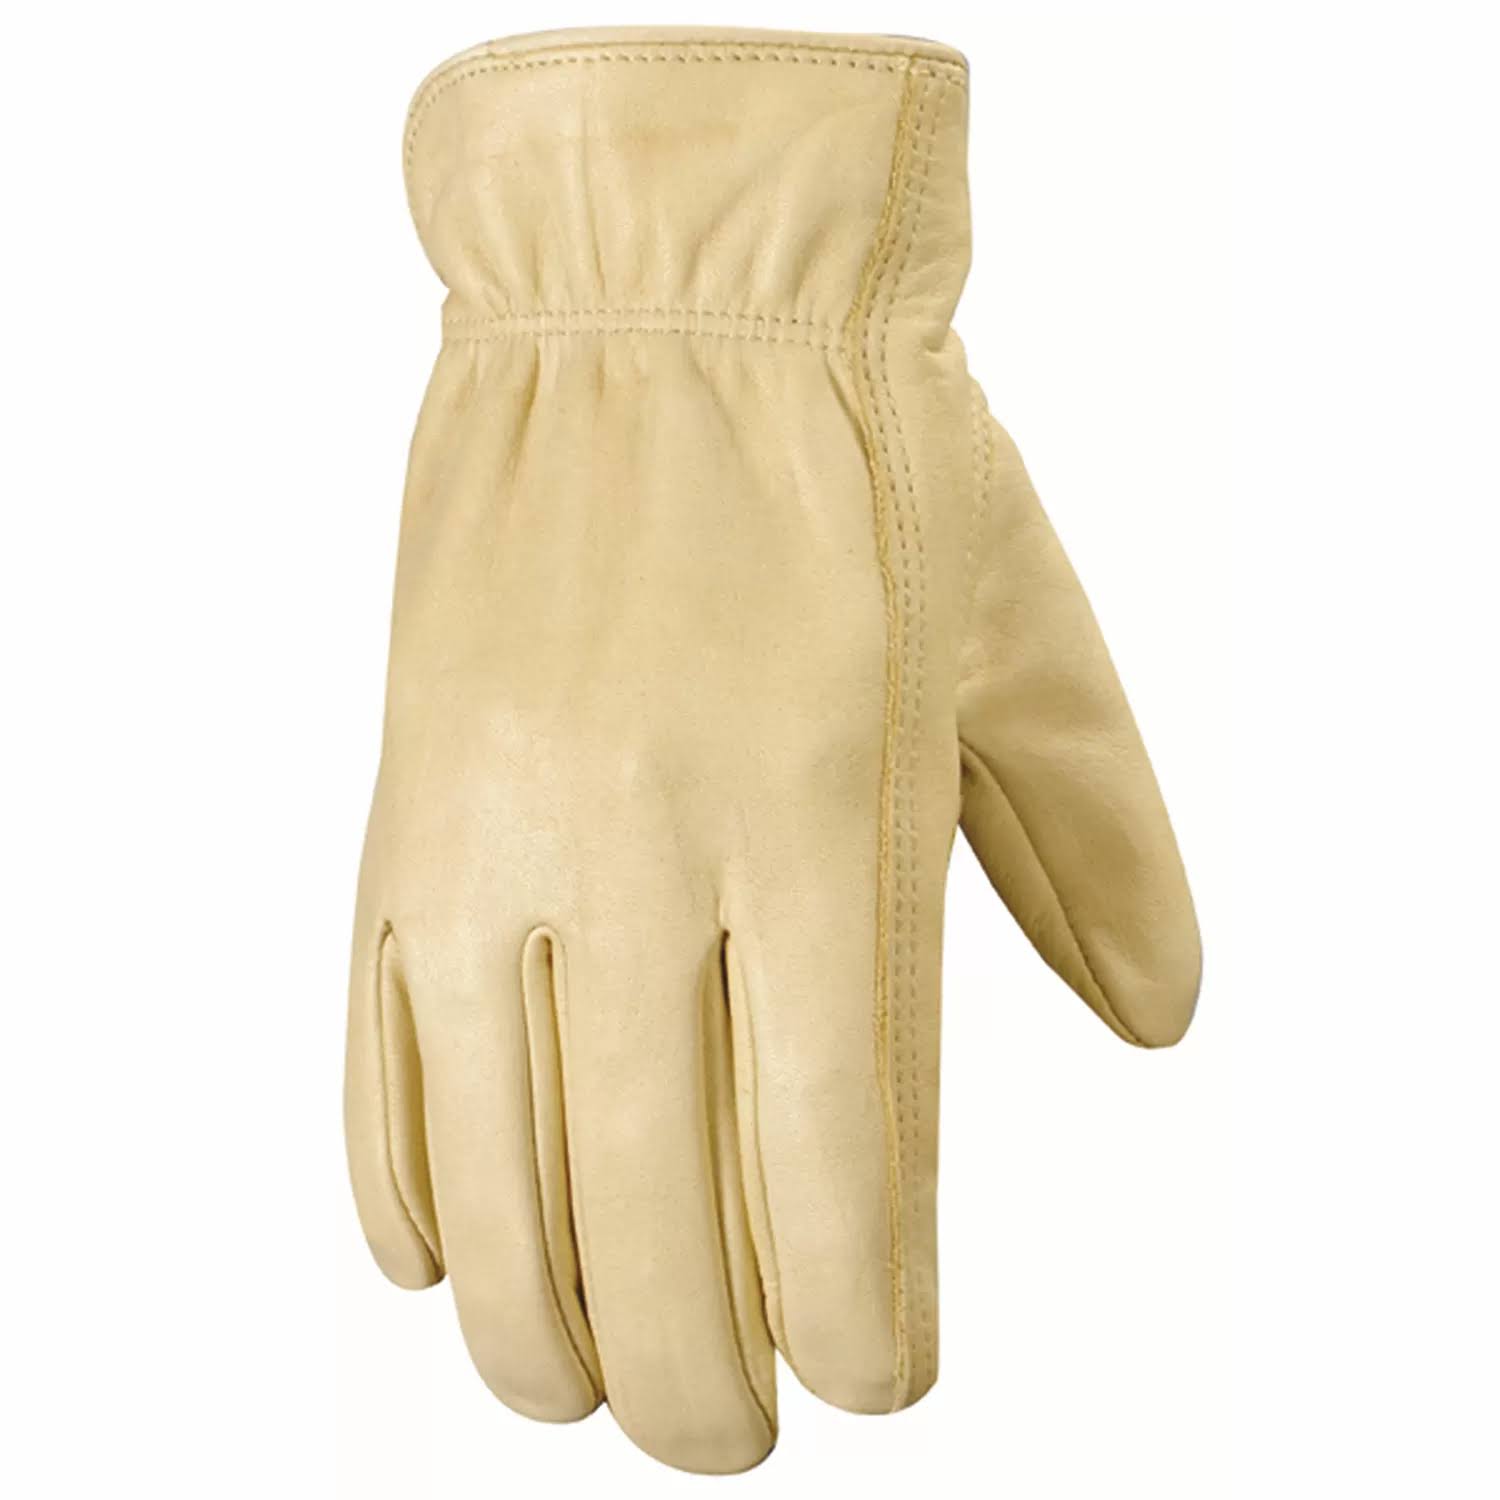 Wells Lamont Grain Cowhide Work Gloves - X Large